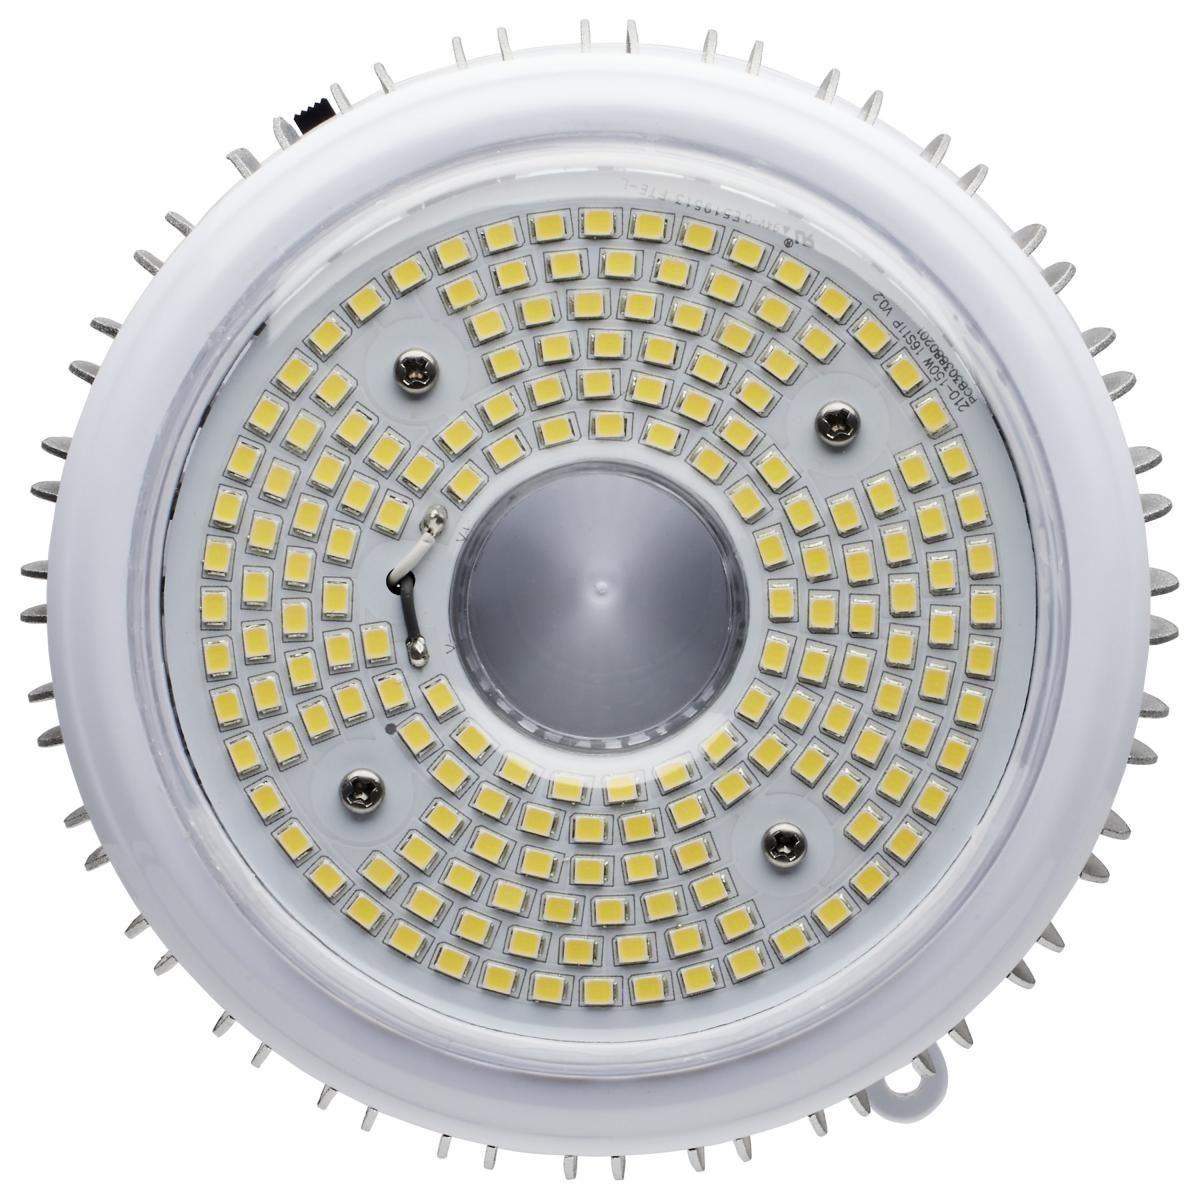 Retrofit LED High Bay Bulb, 150W, 21000 Lumens, 5000K, EX39 Mogul Extended Mogul Base, 120-277V